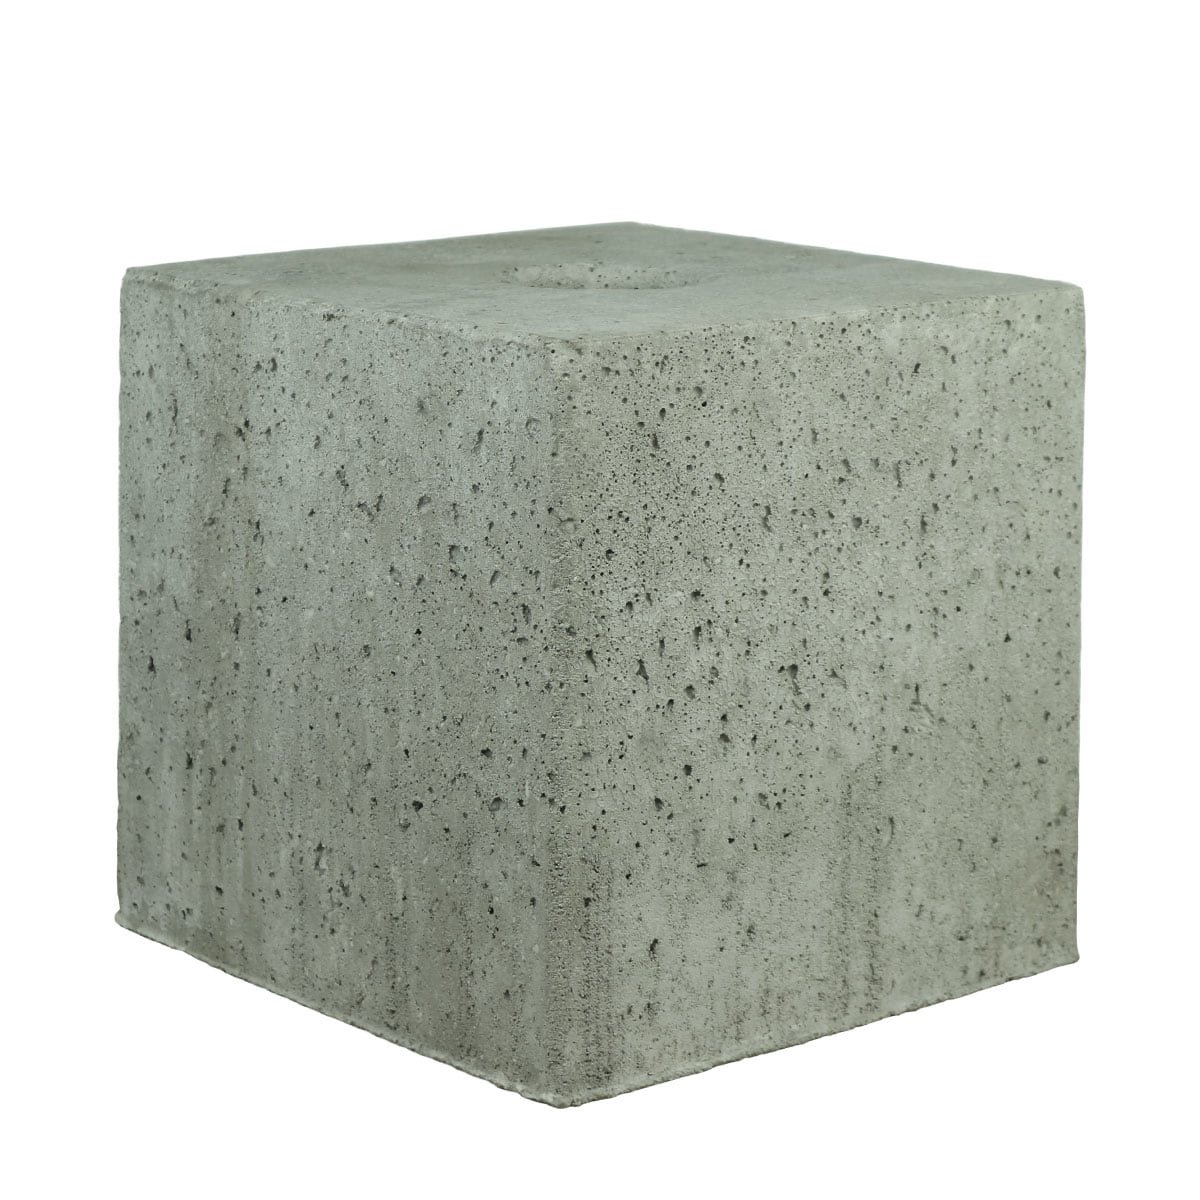 Betonzäune quadrat mit loch - 50 kg